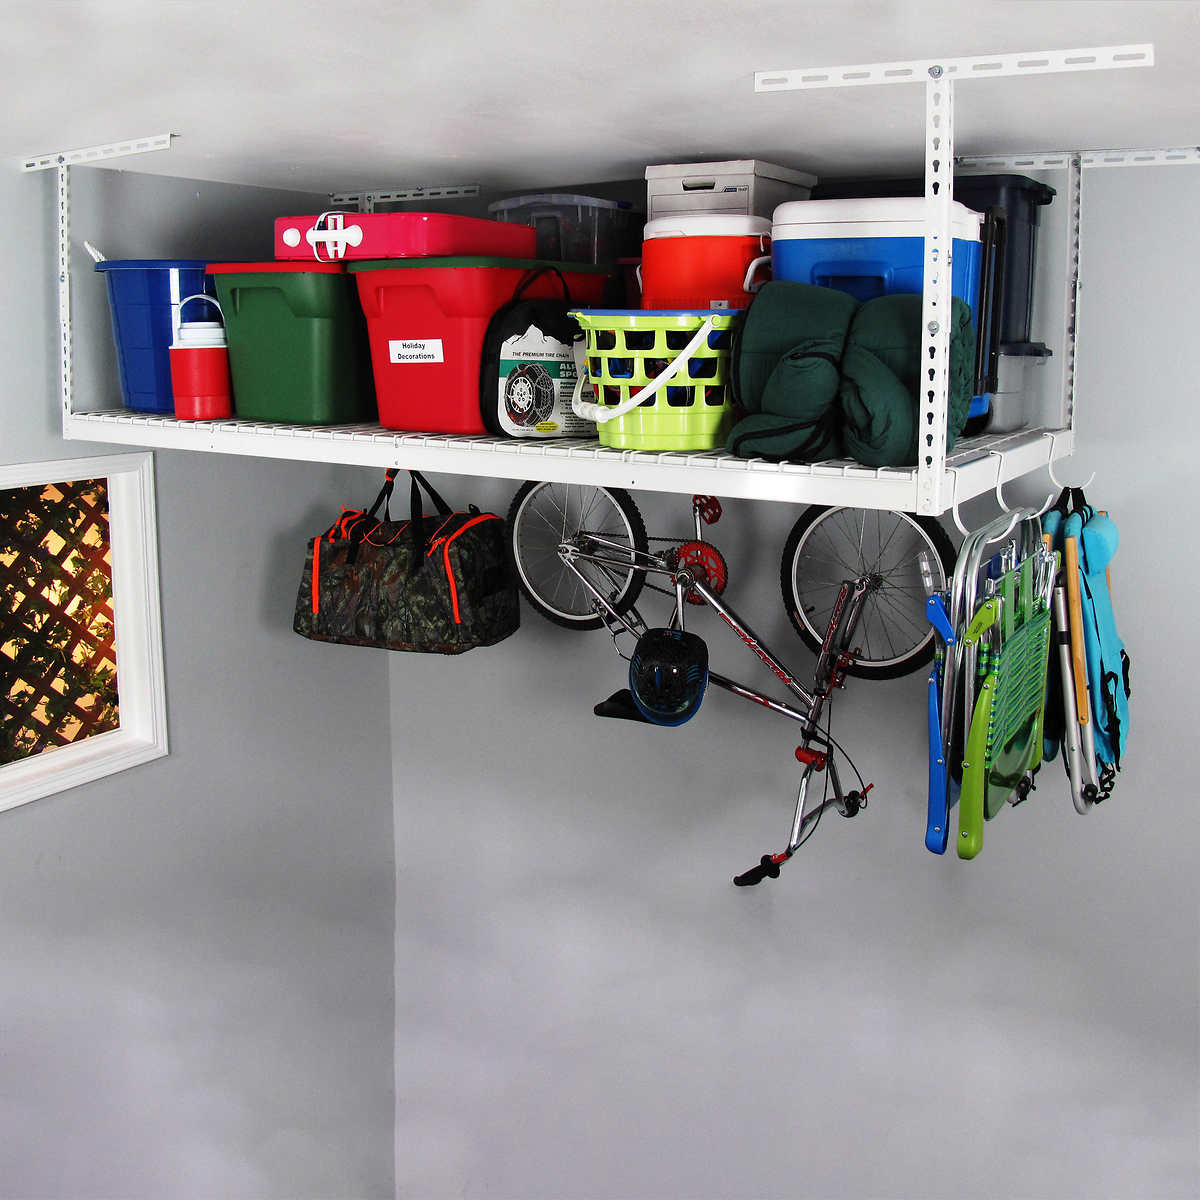 8 Ft Overhead Garage Storage Rack And, Costco Garage Shelving